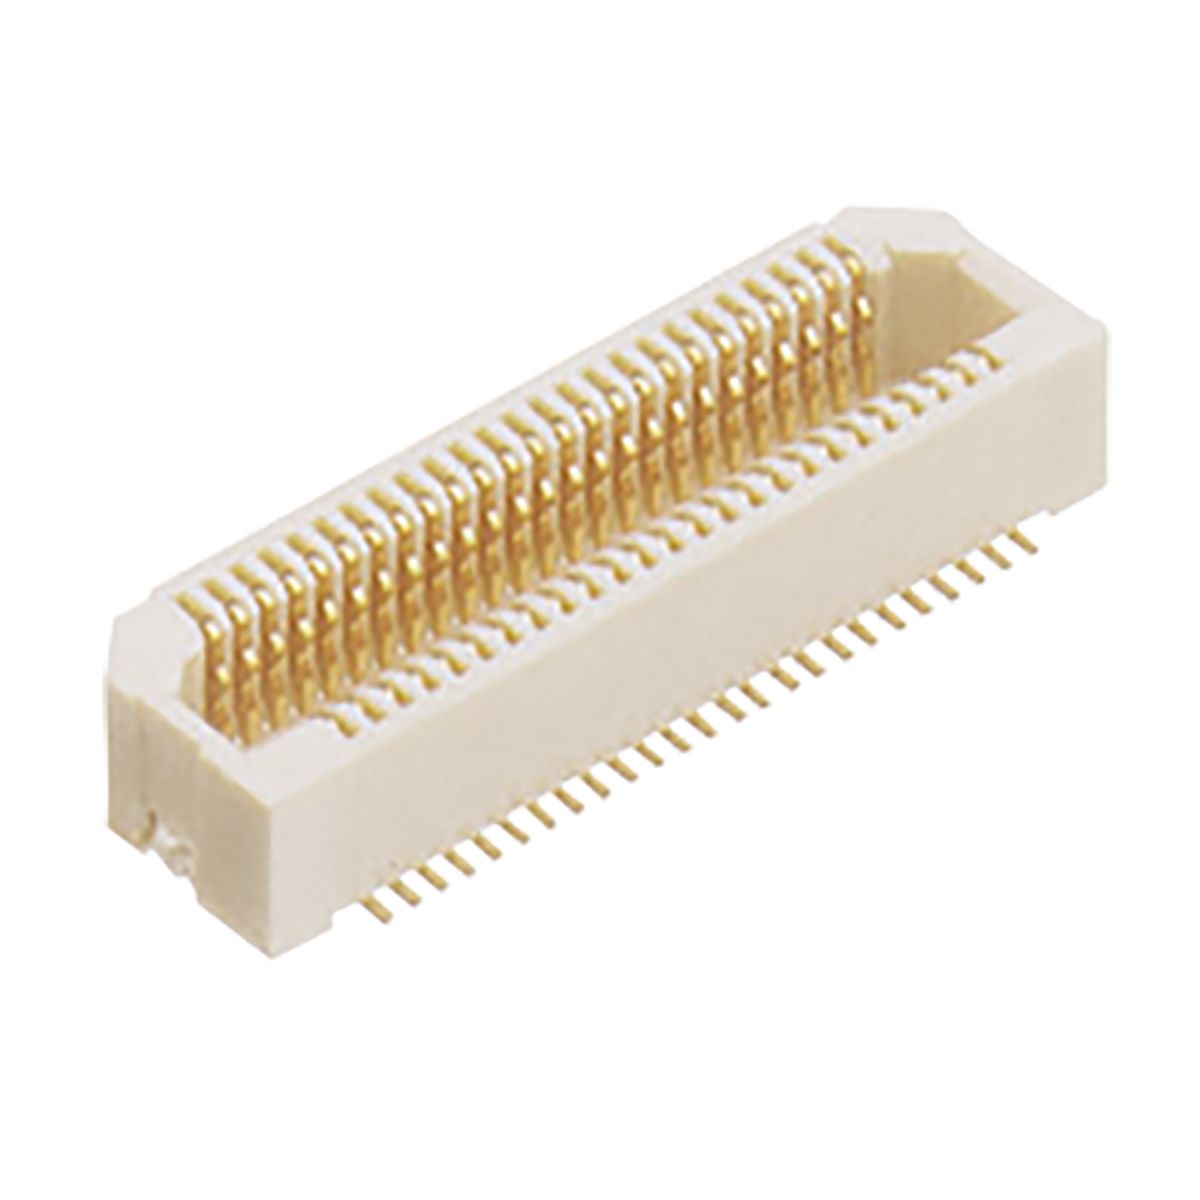 Conector hembra para PCB Panasonic serie P5KS, de 30 vías en 2 filas, paso 0.5mm, 60 V, 16A, Montaje Superficial, para